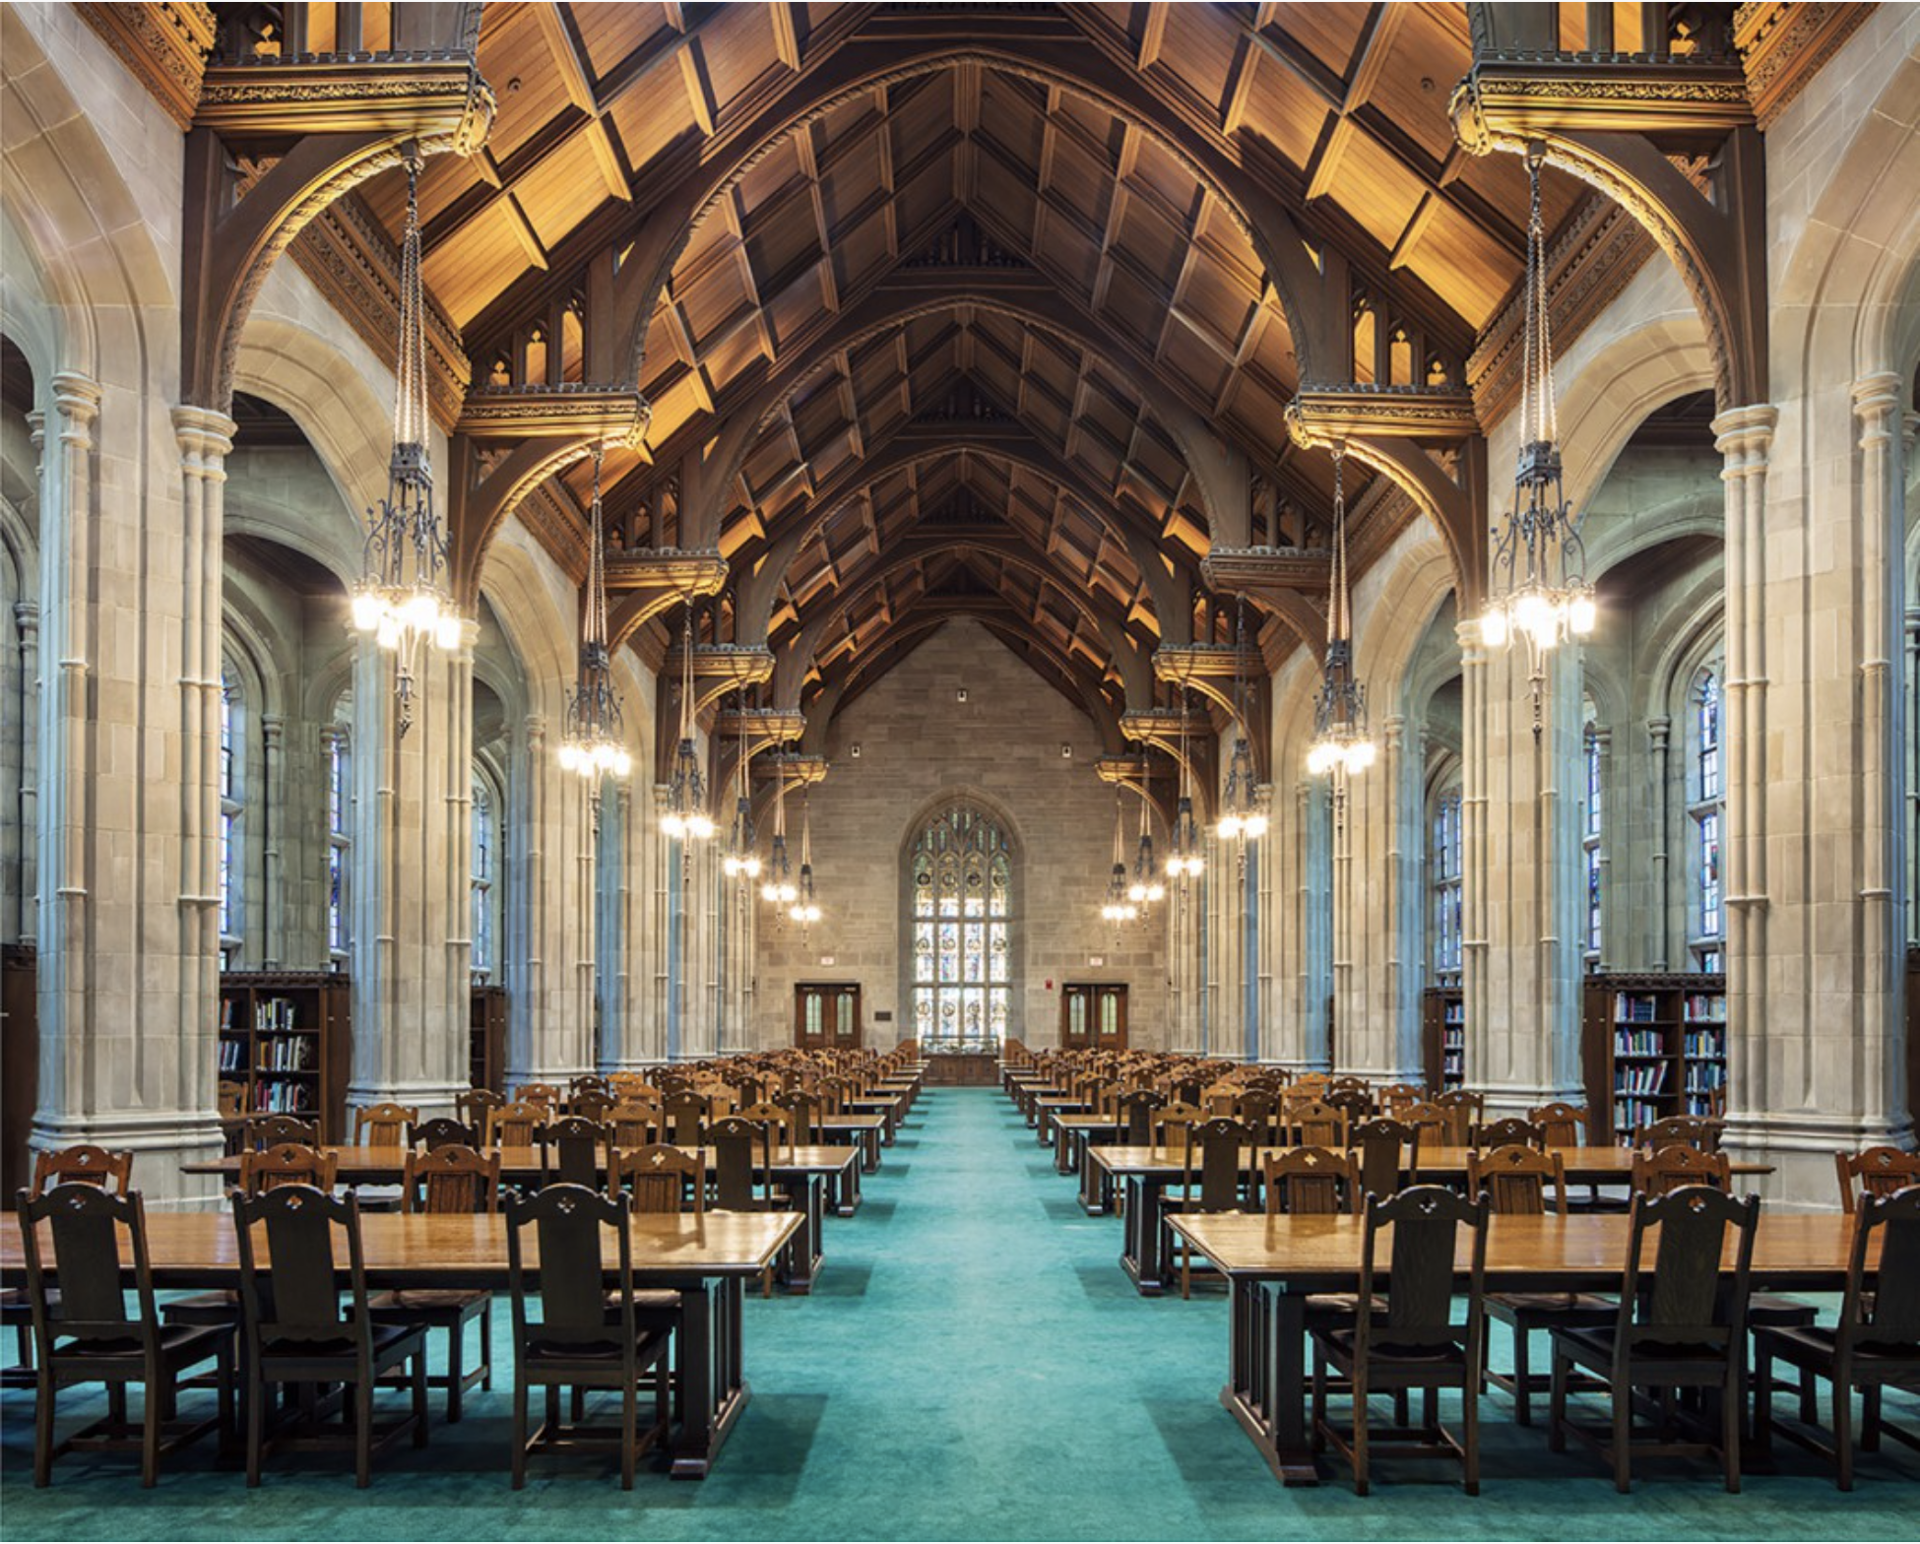 Bapst Library, Boston, USA by Reinhard Gorner